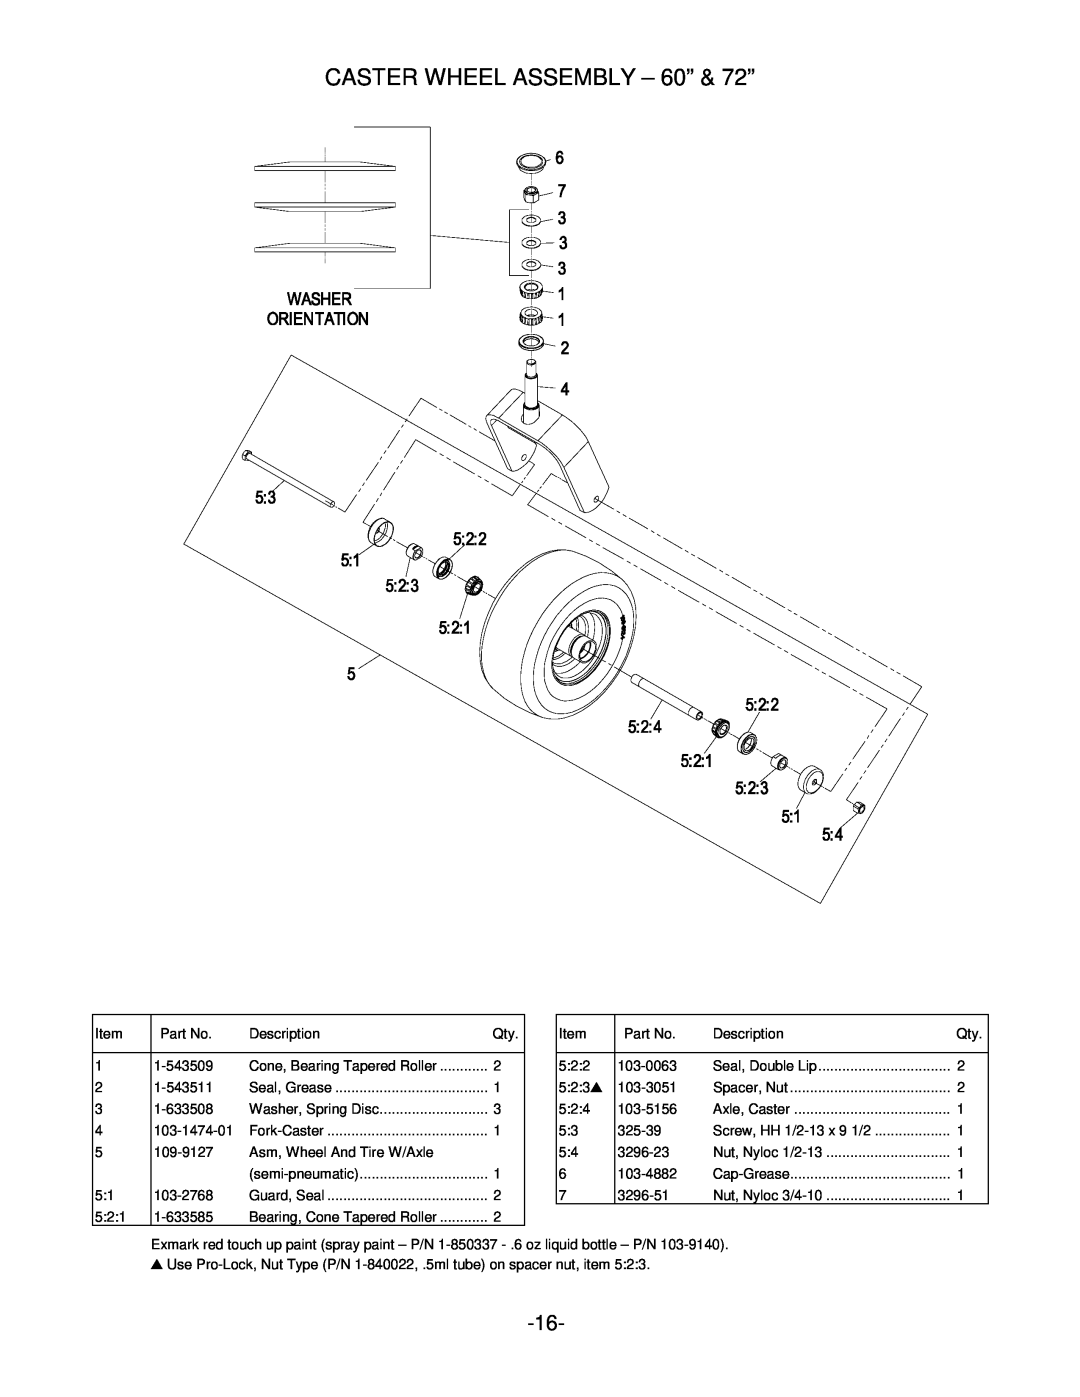 Exmark Lazer Z manual CASTER WHEEL ASSEMBLY - 60” & 72” 